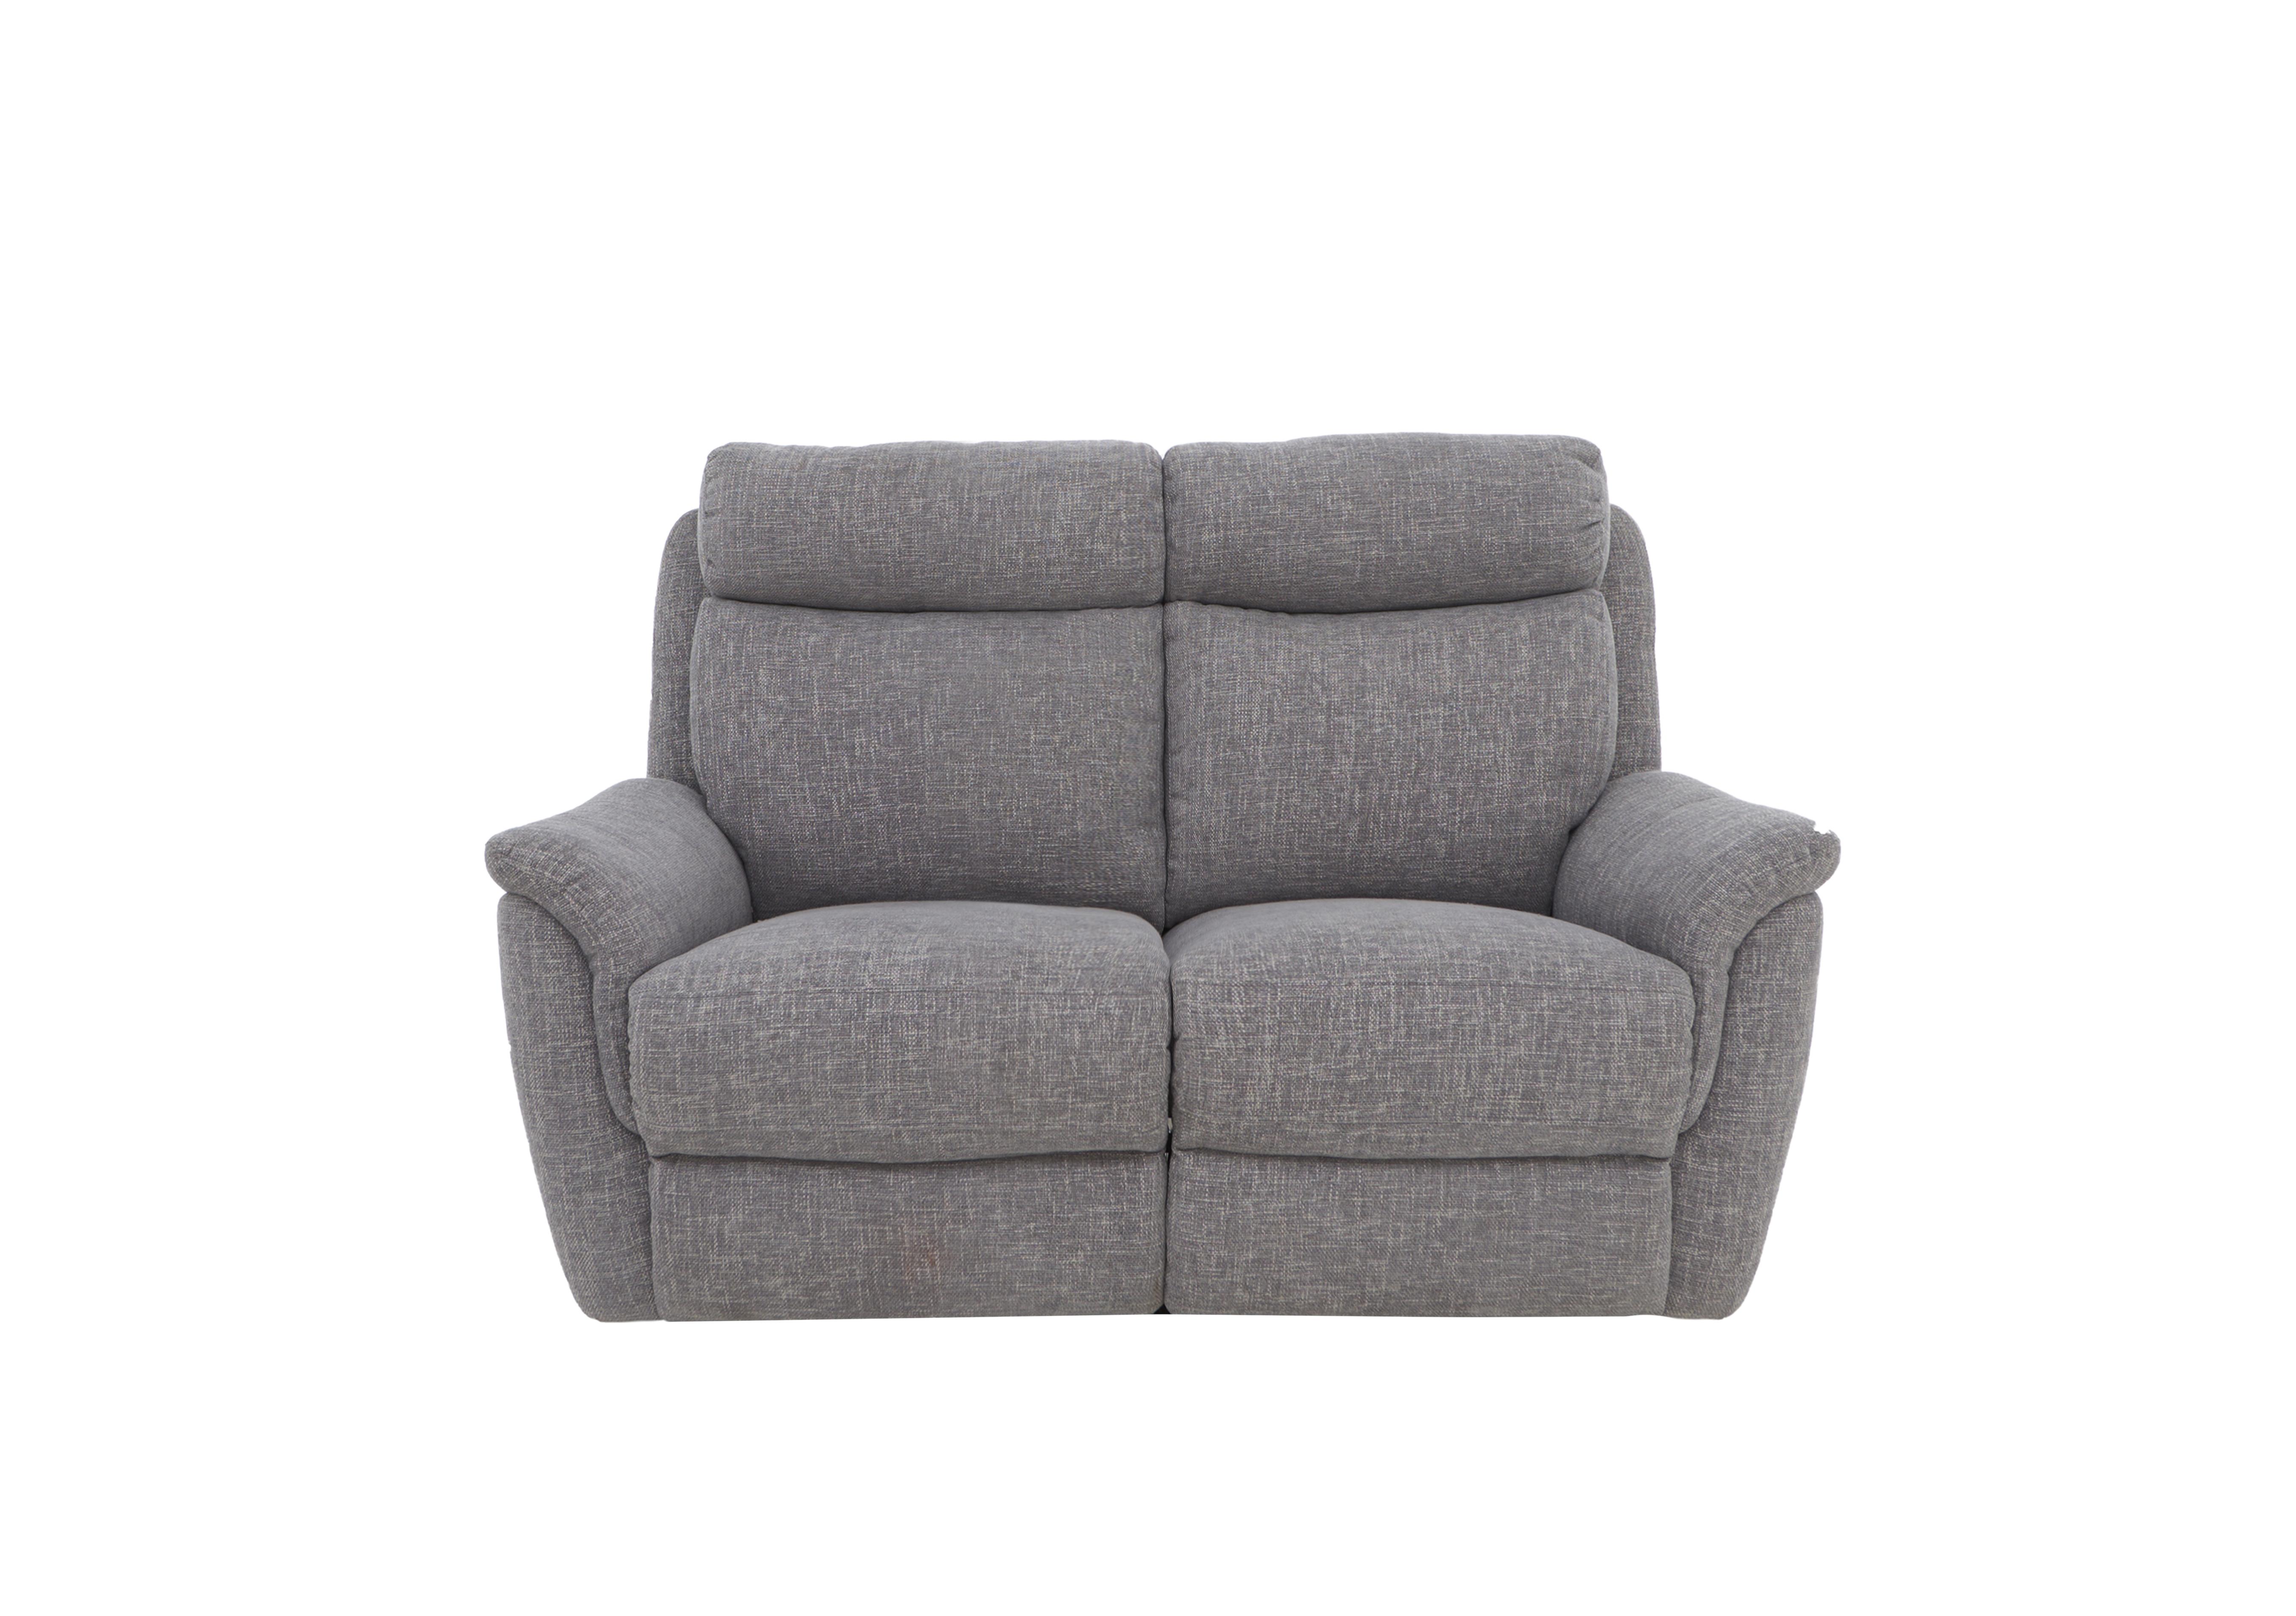 Orlando 2 Seater Fabric Sofa in Anivia Grey 12445 on Furniture Village